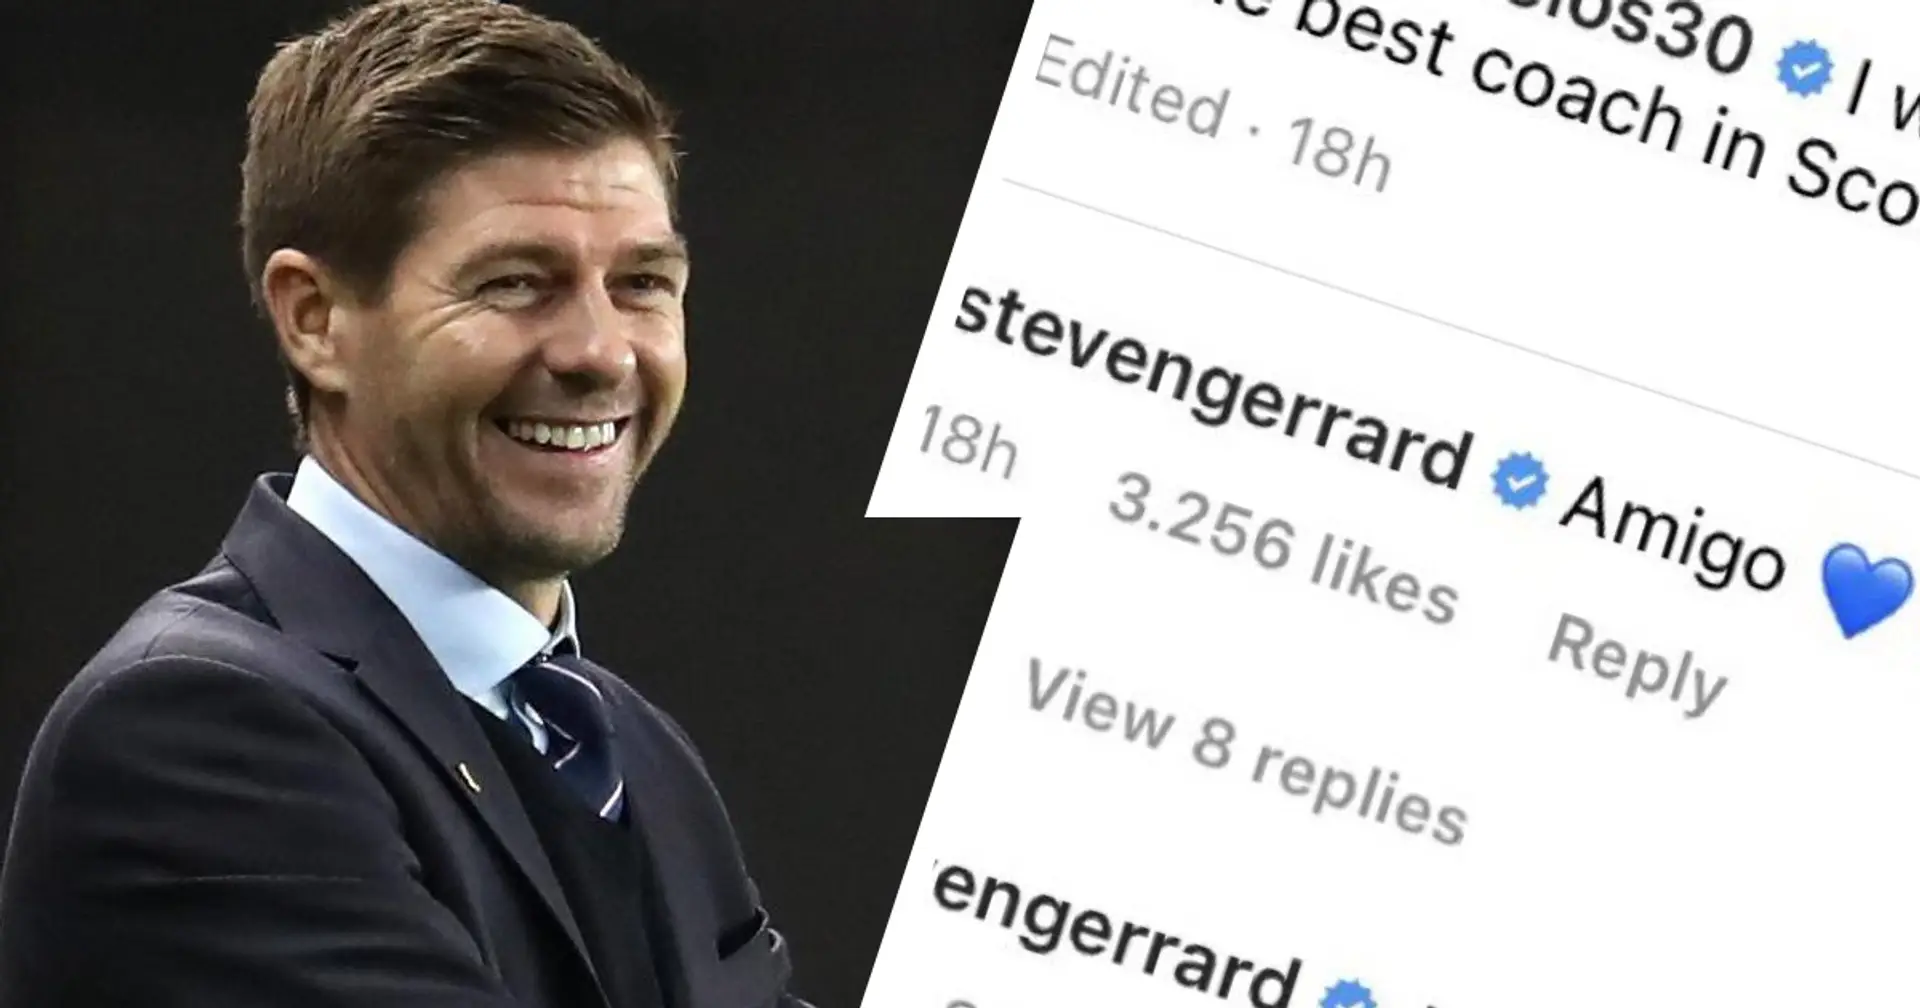 'Just Scotland? Not the world?': Gerrard's hilarious response to player's birthday wish